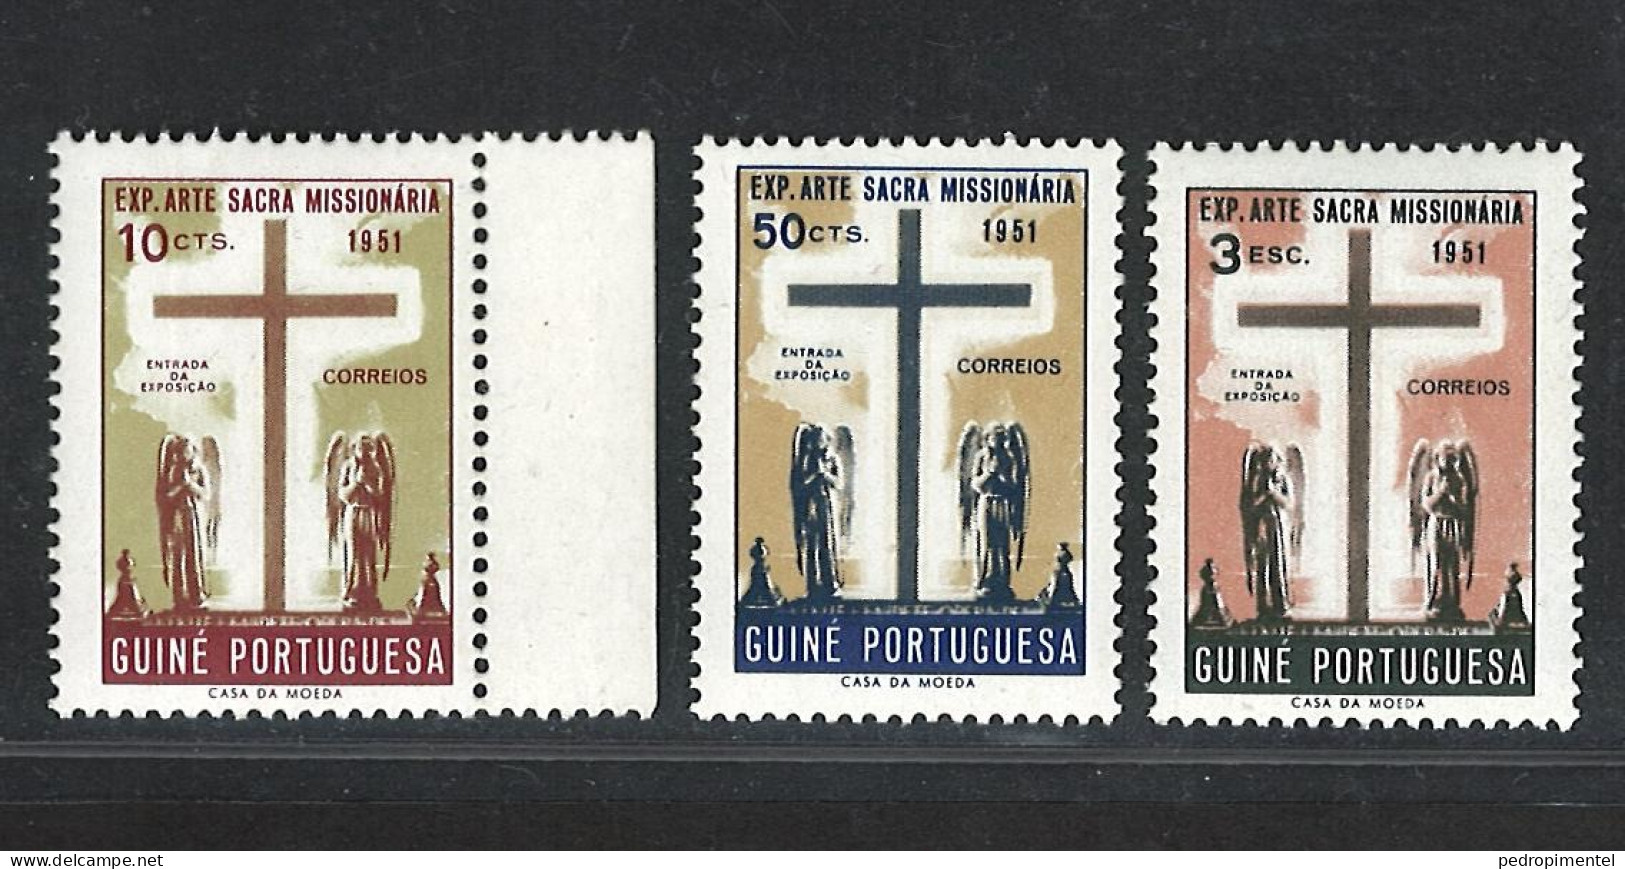 Portugal Guinee 1953 "Sacred Art" MNH OG #267-269 - Guinea Portuguesa